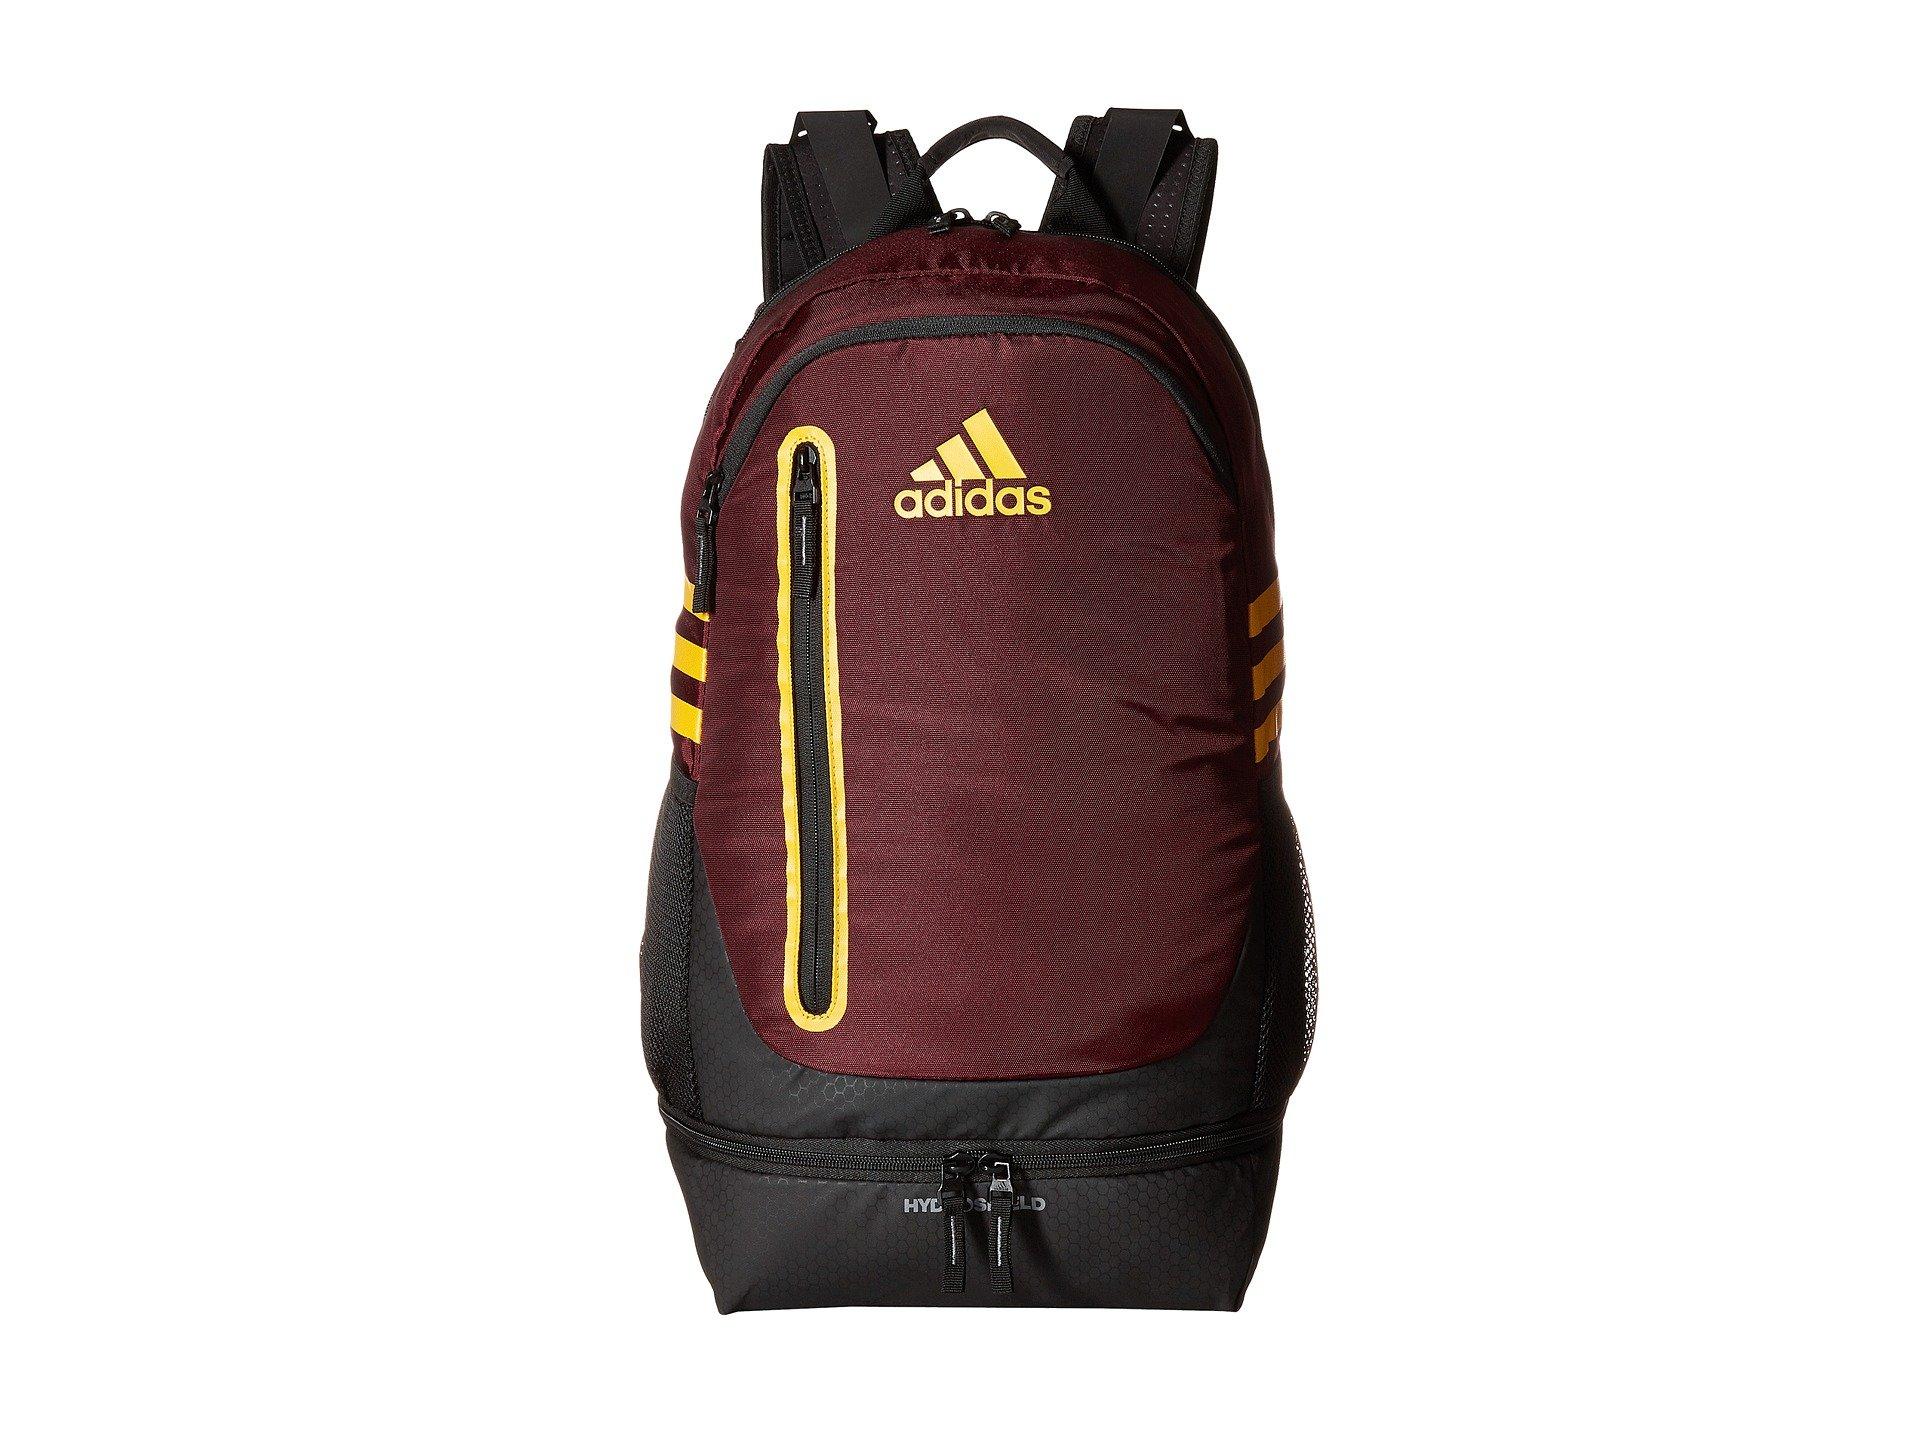 adidas pivot backpack